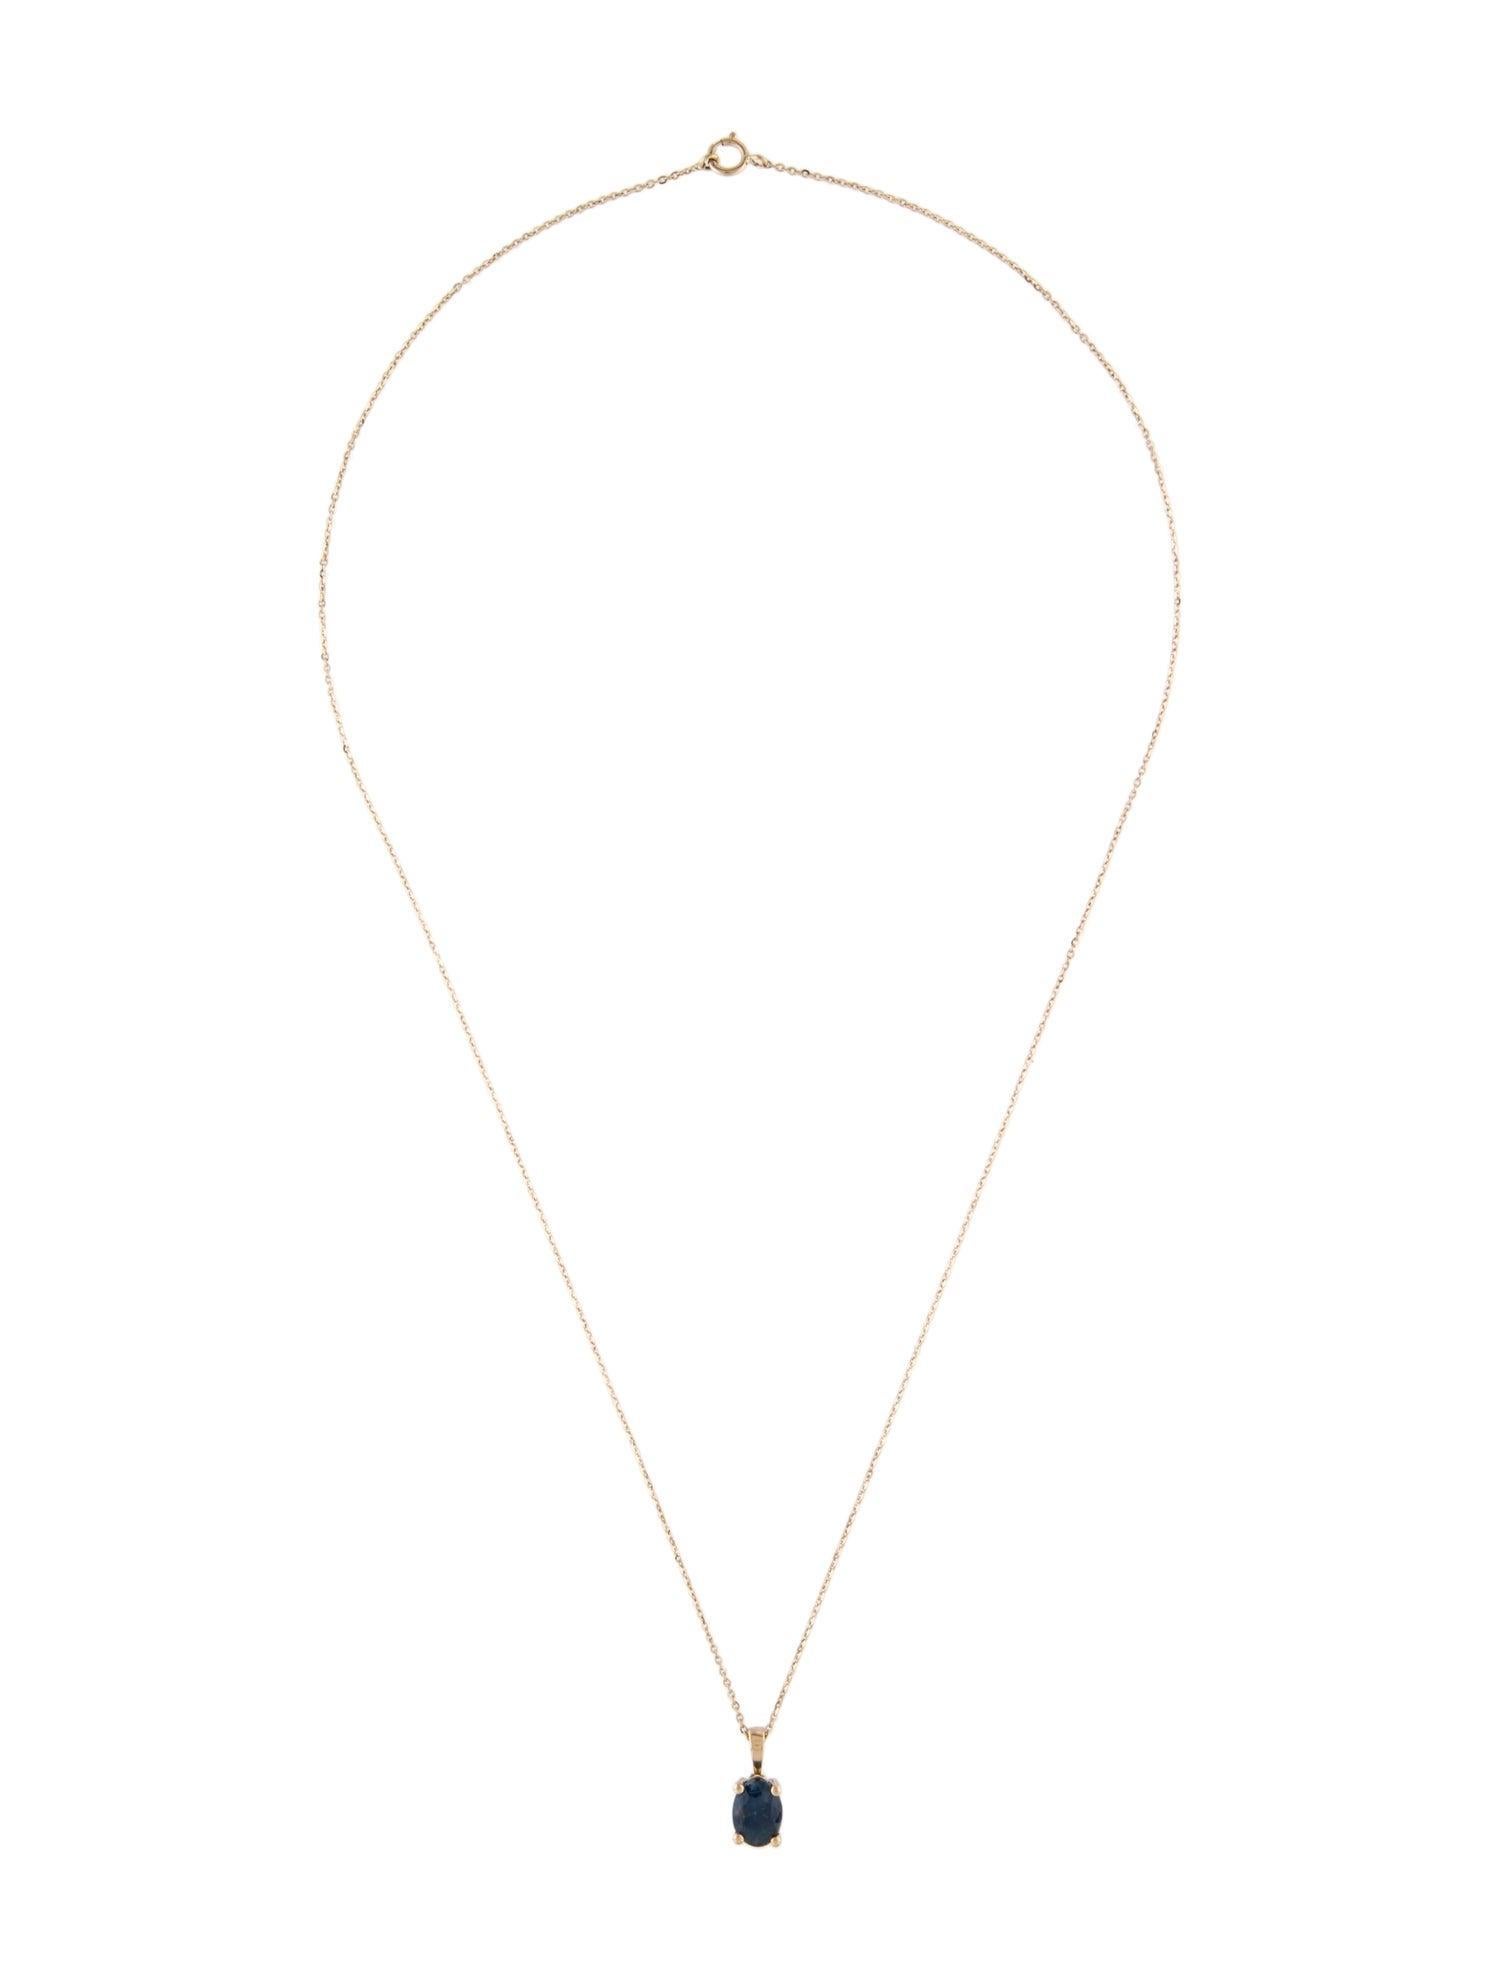 Women's Stunning 14K Sapphire Pendant Necklace  1.50ct Sparkling Gemstone Accent Piece For Sale